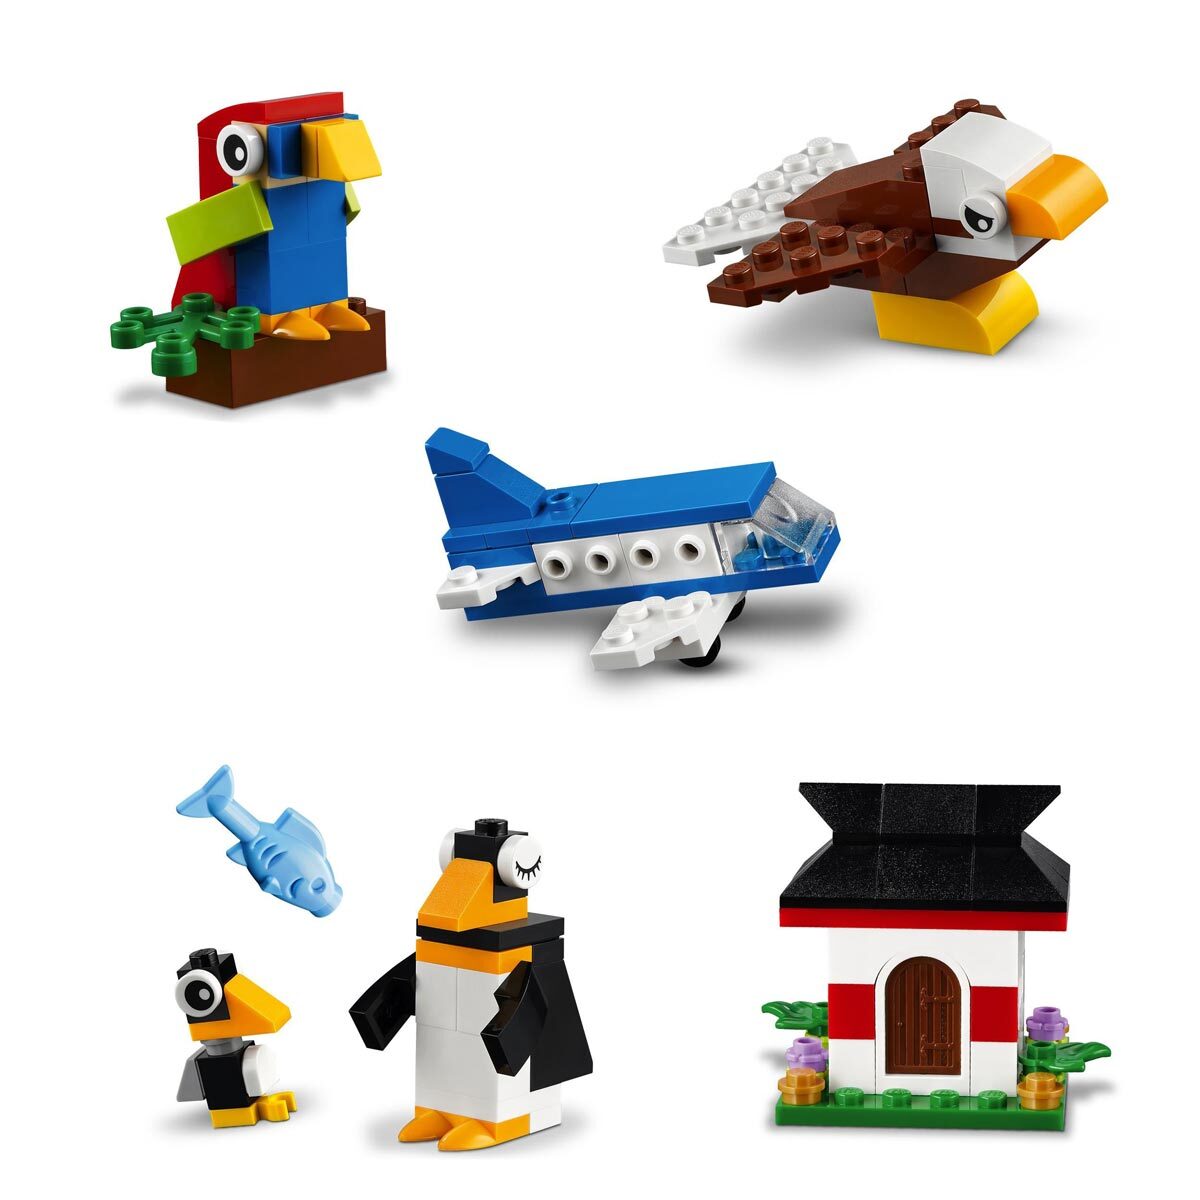 Buy LEGO Classic Around the World Close up Image at costco.co.uk